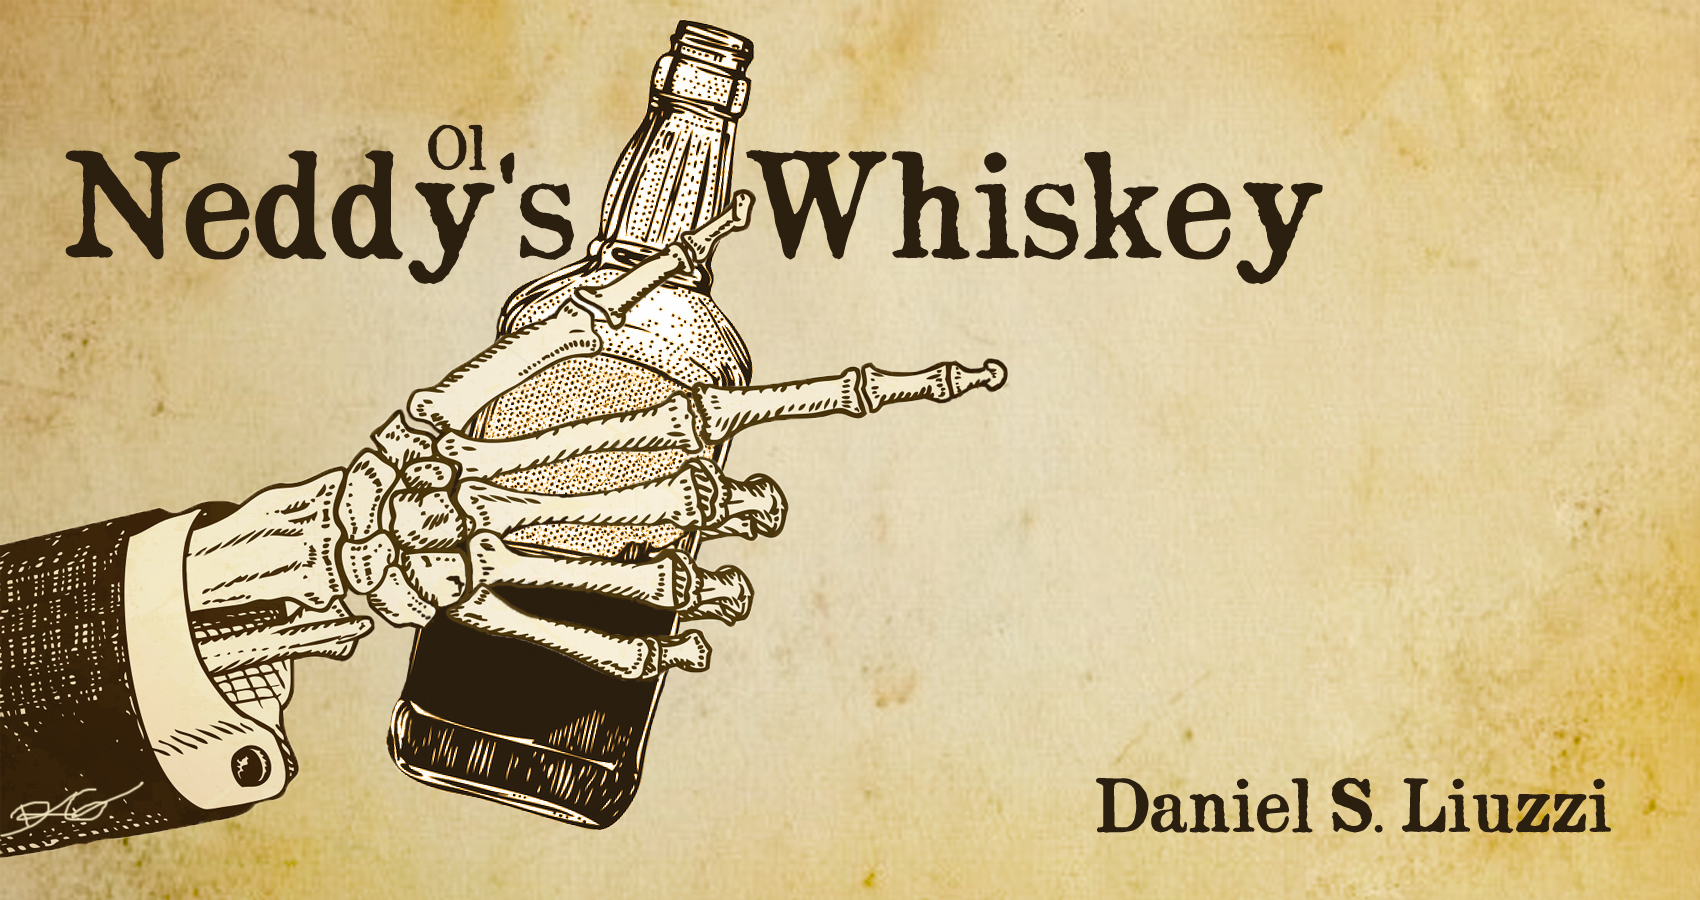 Ol' Neddy's Whiskey by Daniel S. Liuzzi at Spillwords.com